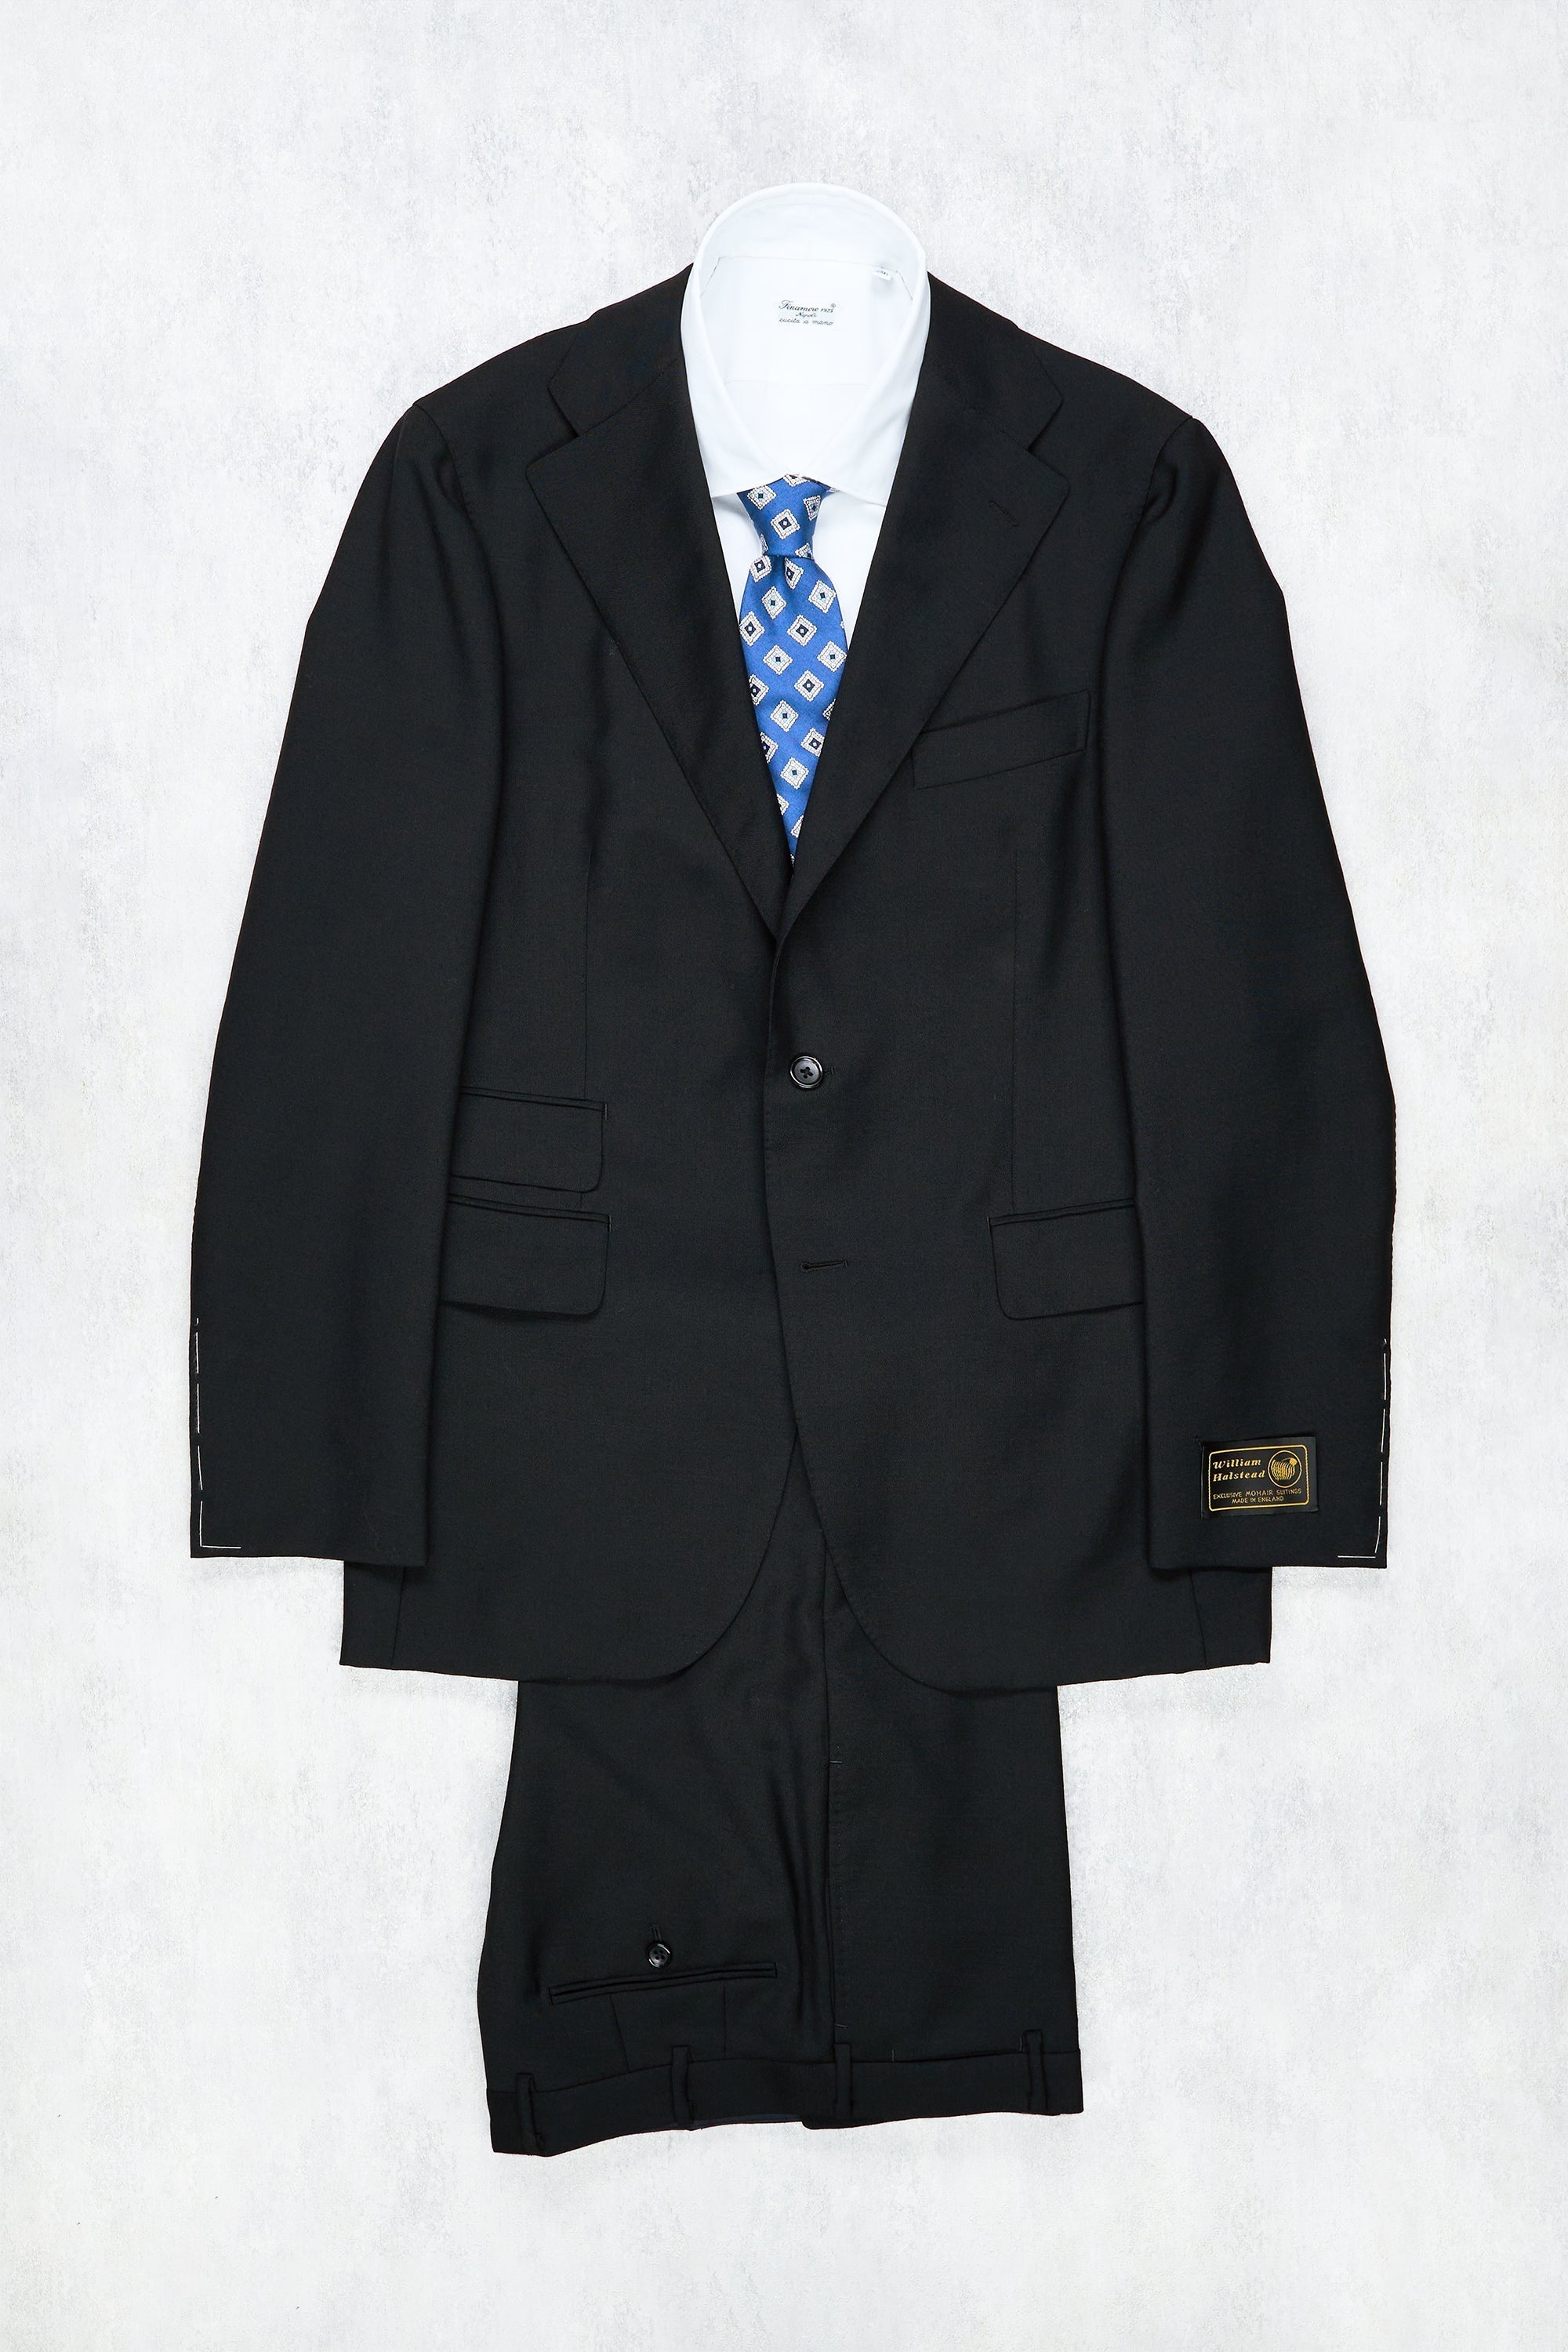 Attire House Black Wool/Mohair Suit *sample*